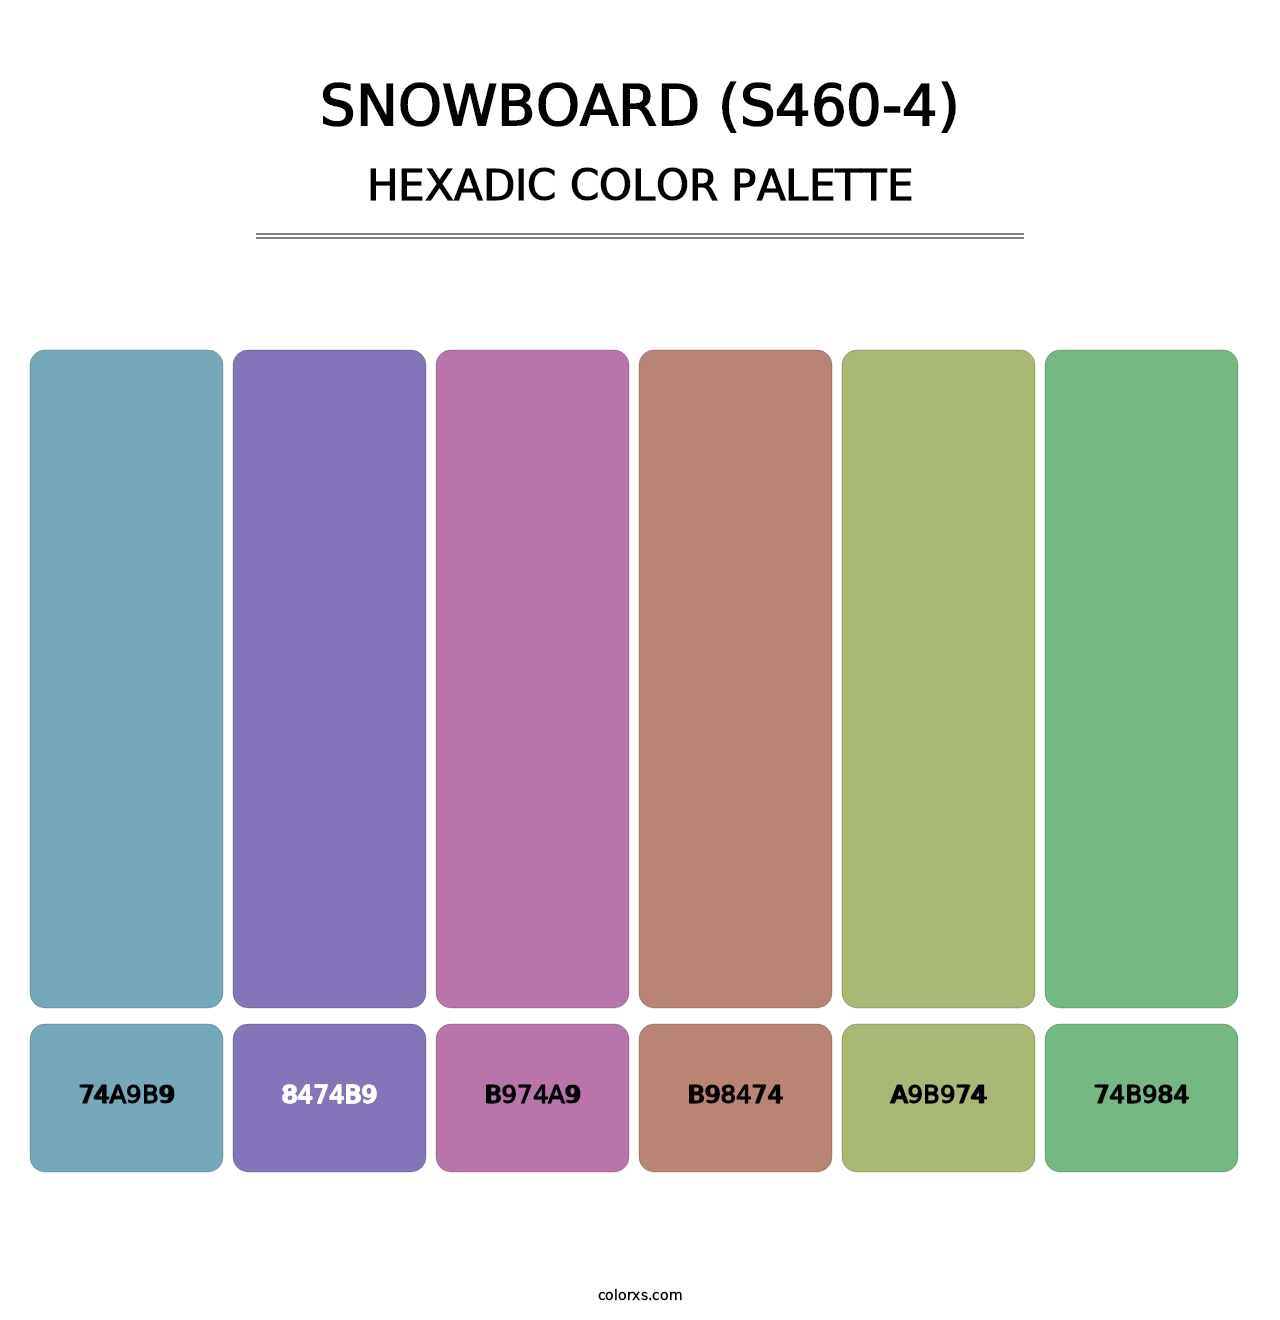 Snowboard (S460-4) - Hexadic Color Palette